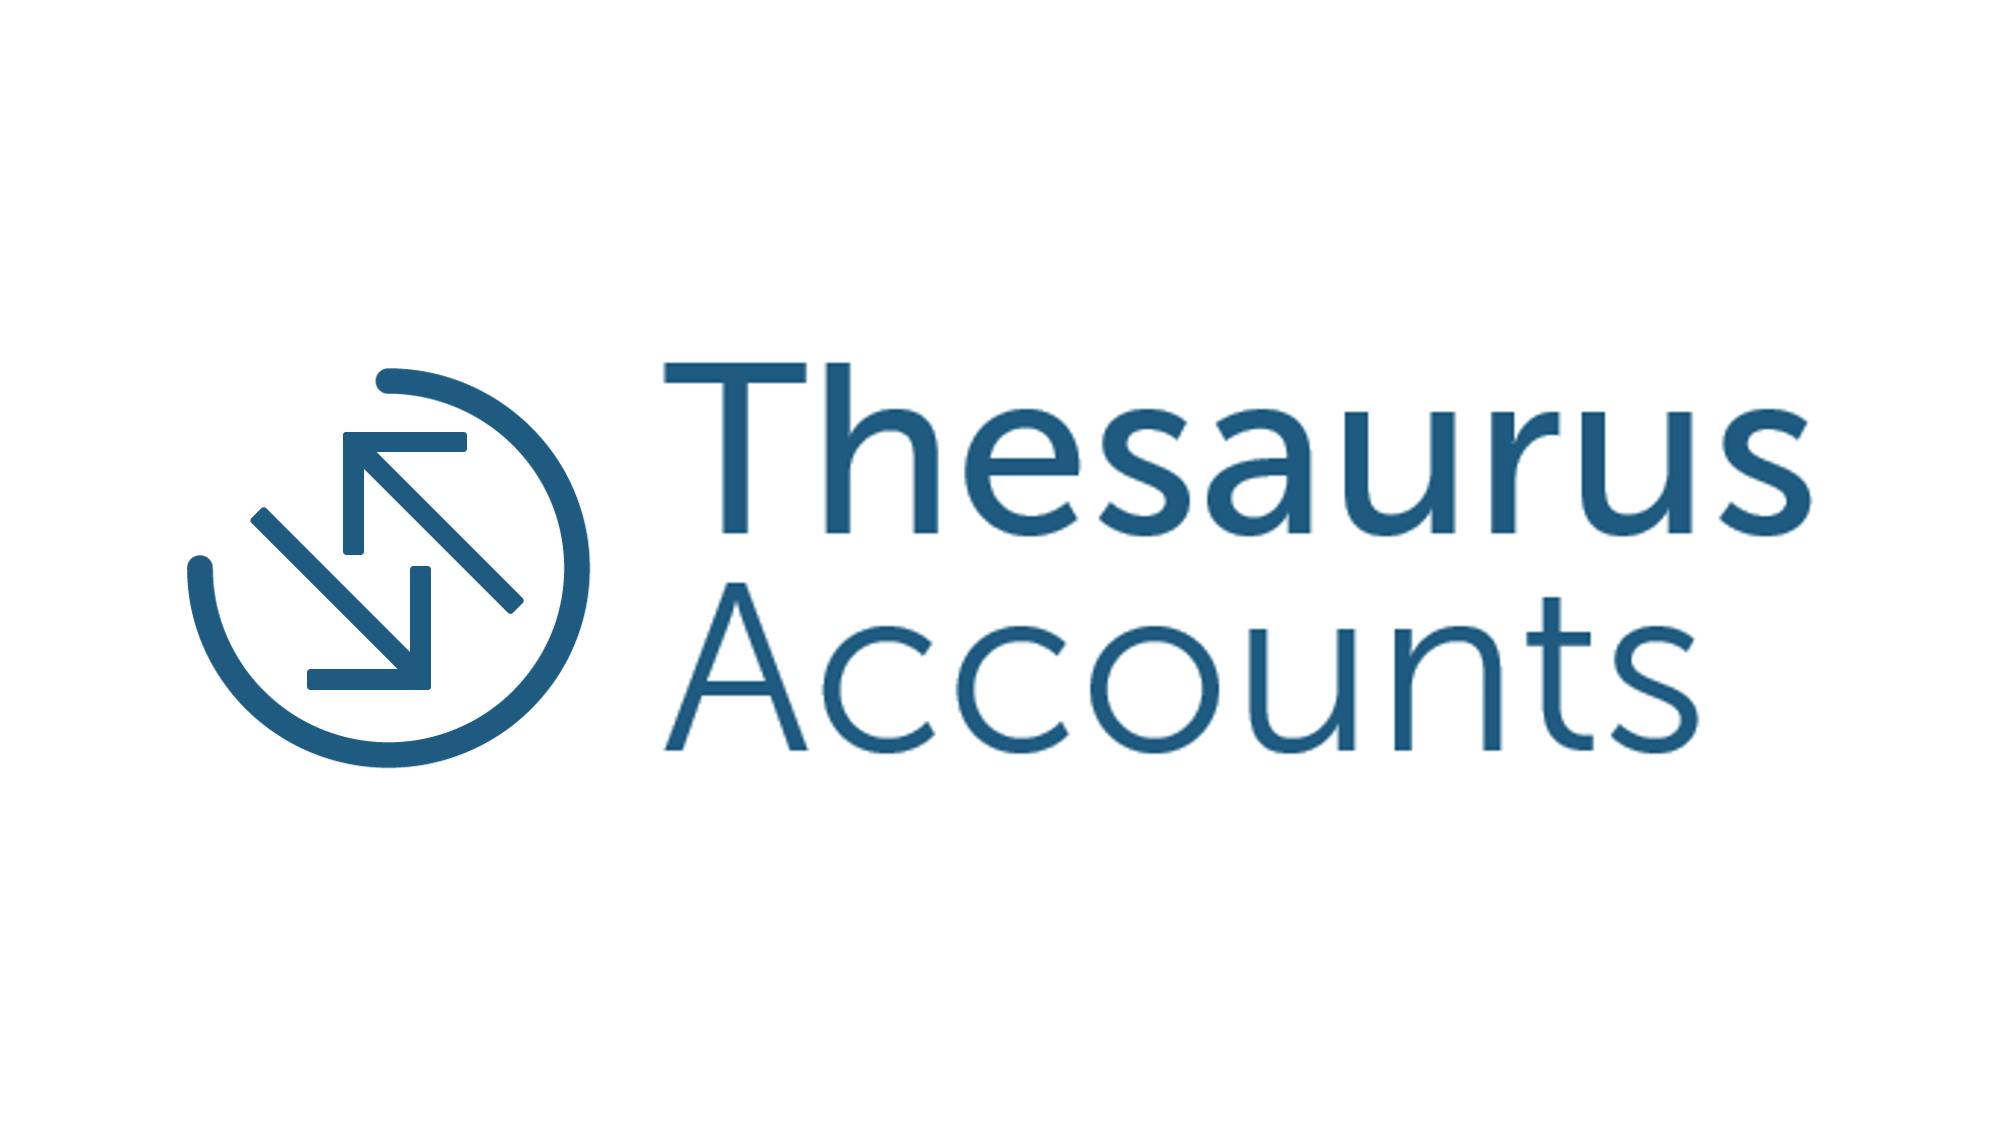 Thesaurus Accounts logo